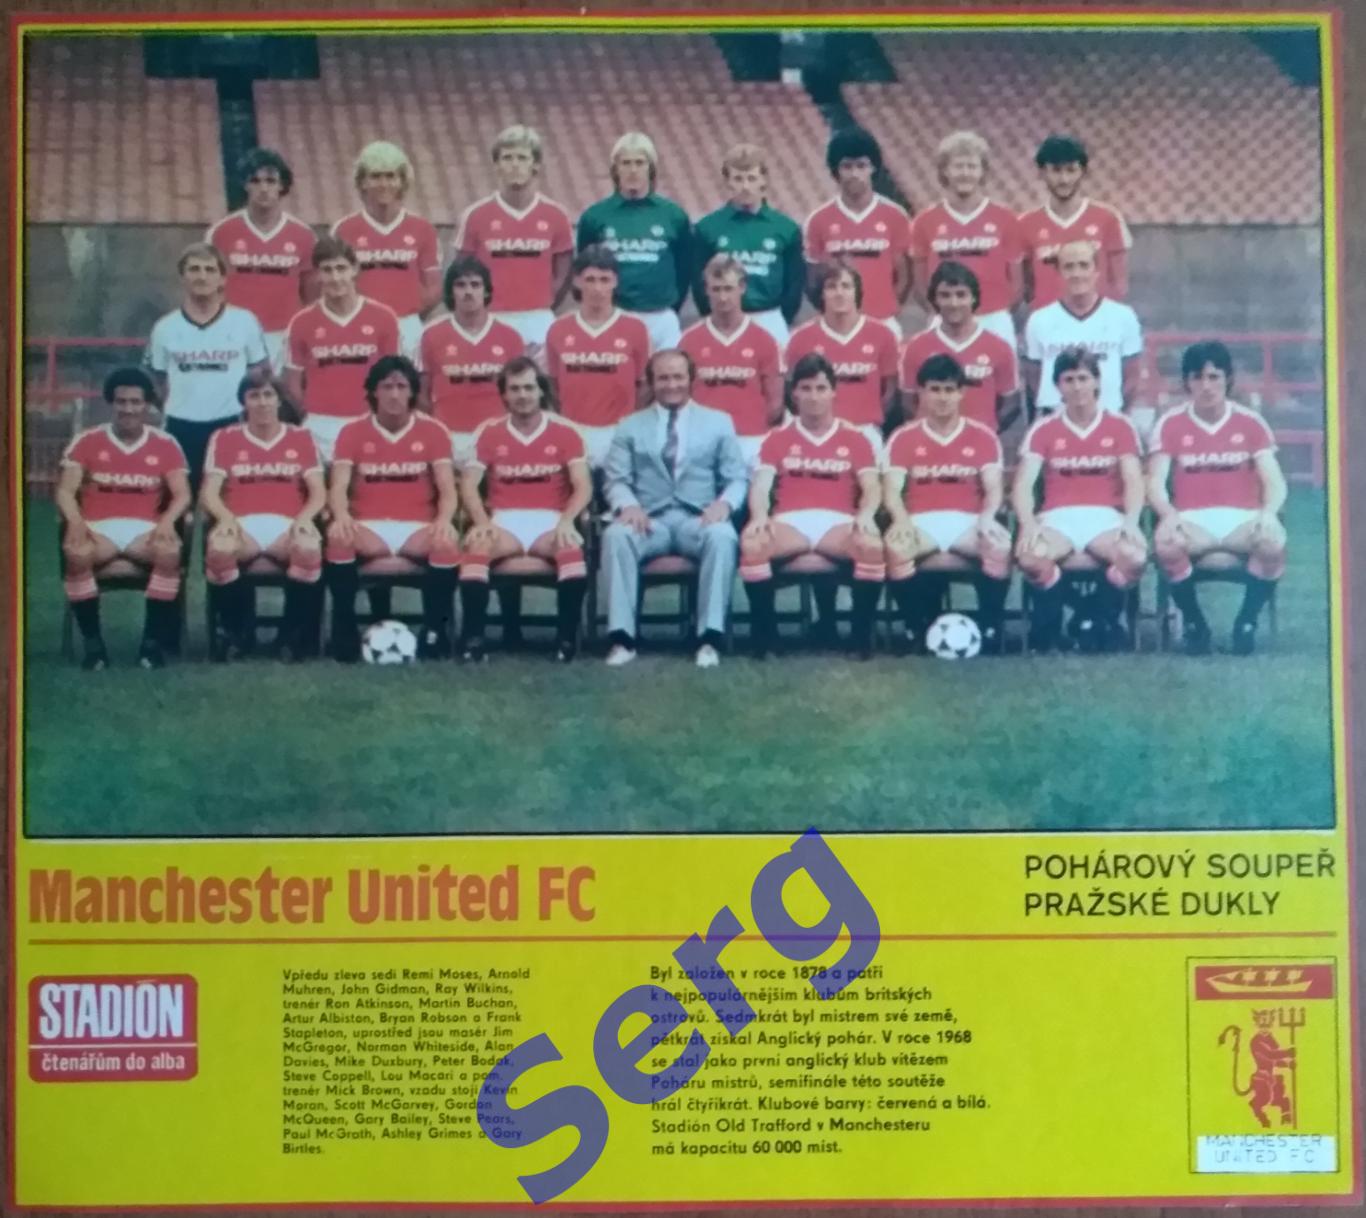 Постер Манчестер Юнайтед Манчестер, Англия из журнала Стадион/Stadion 1983